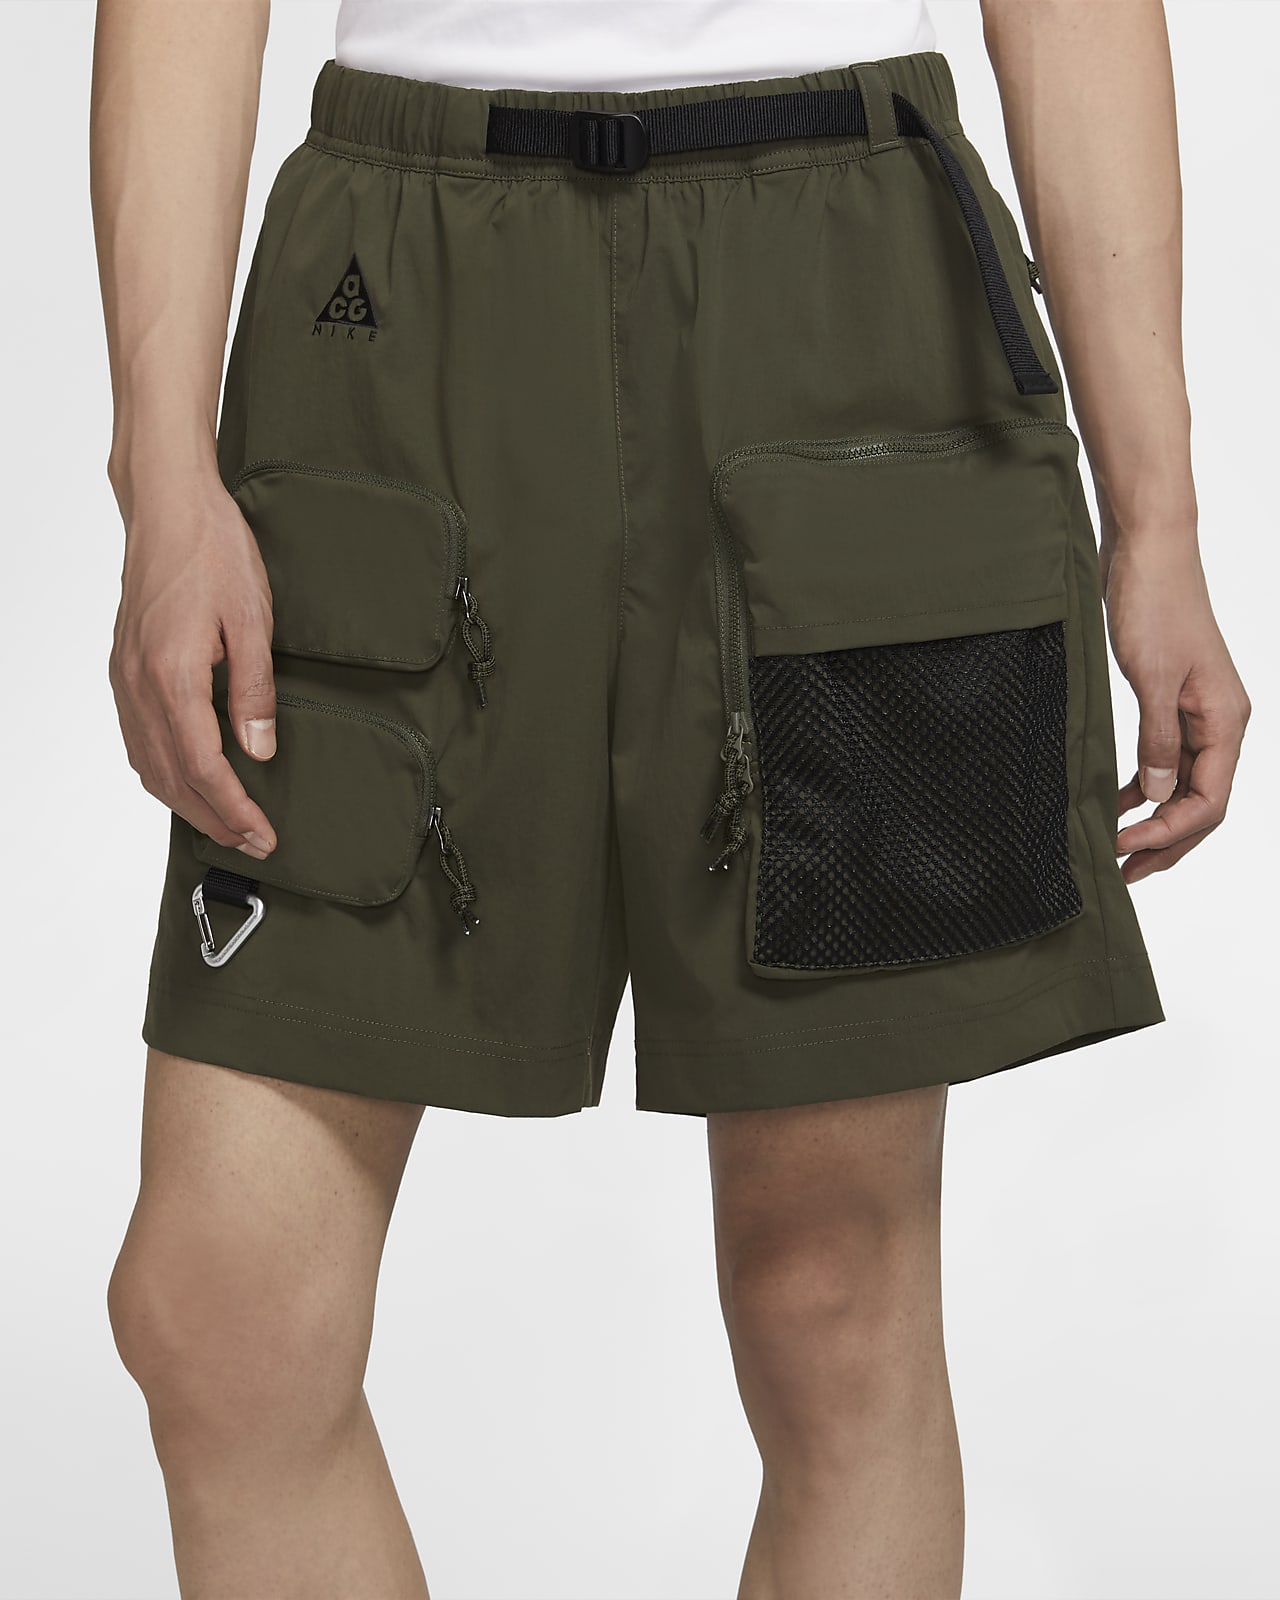 acg cargo shorts